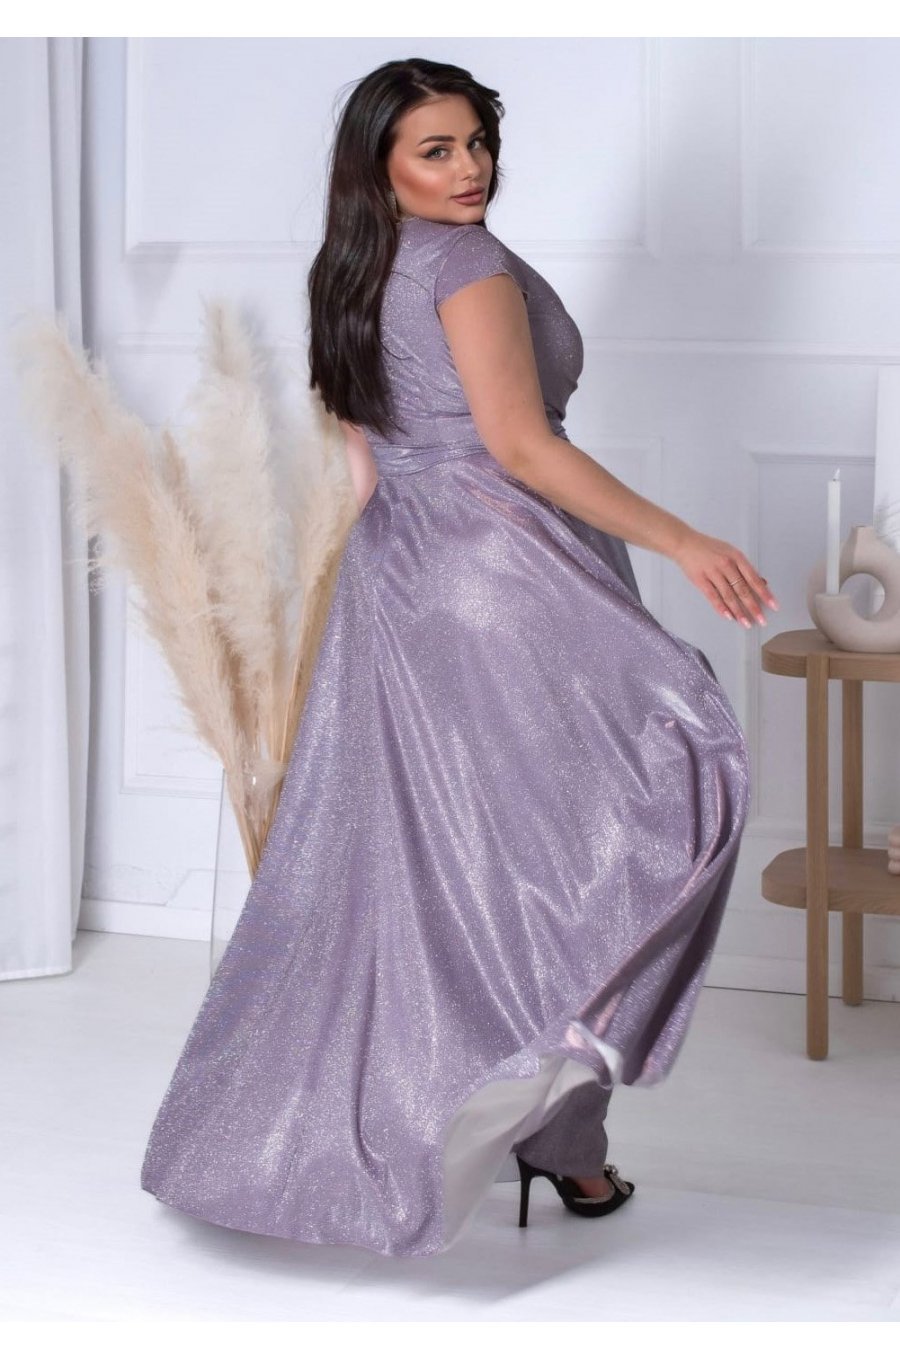 Rochie eleganta in marimi mari, lunga, din bumbac cu glitter, violet, crapata pe picior,  AmandaW 2 - jojofashion.ro